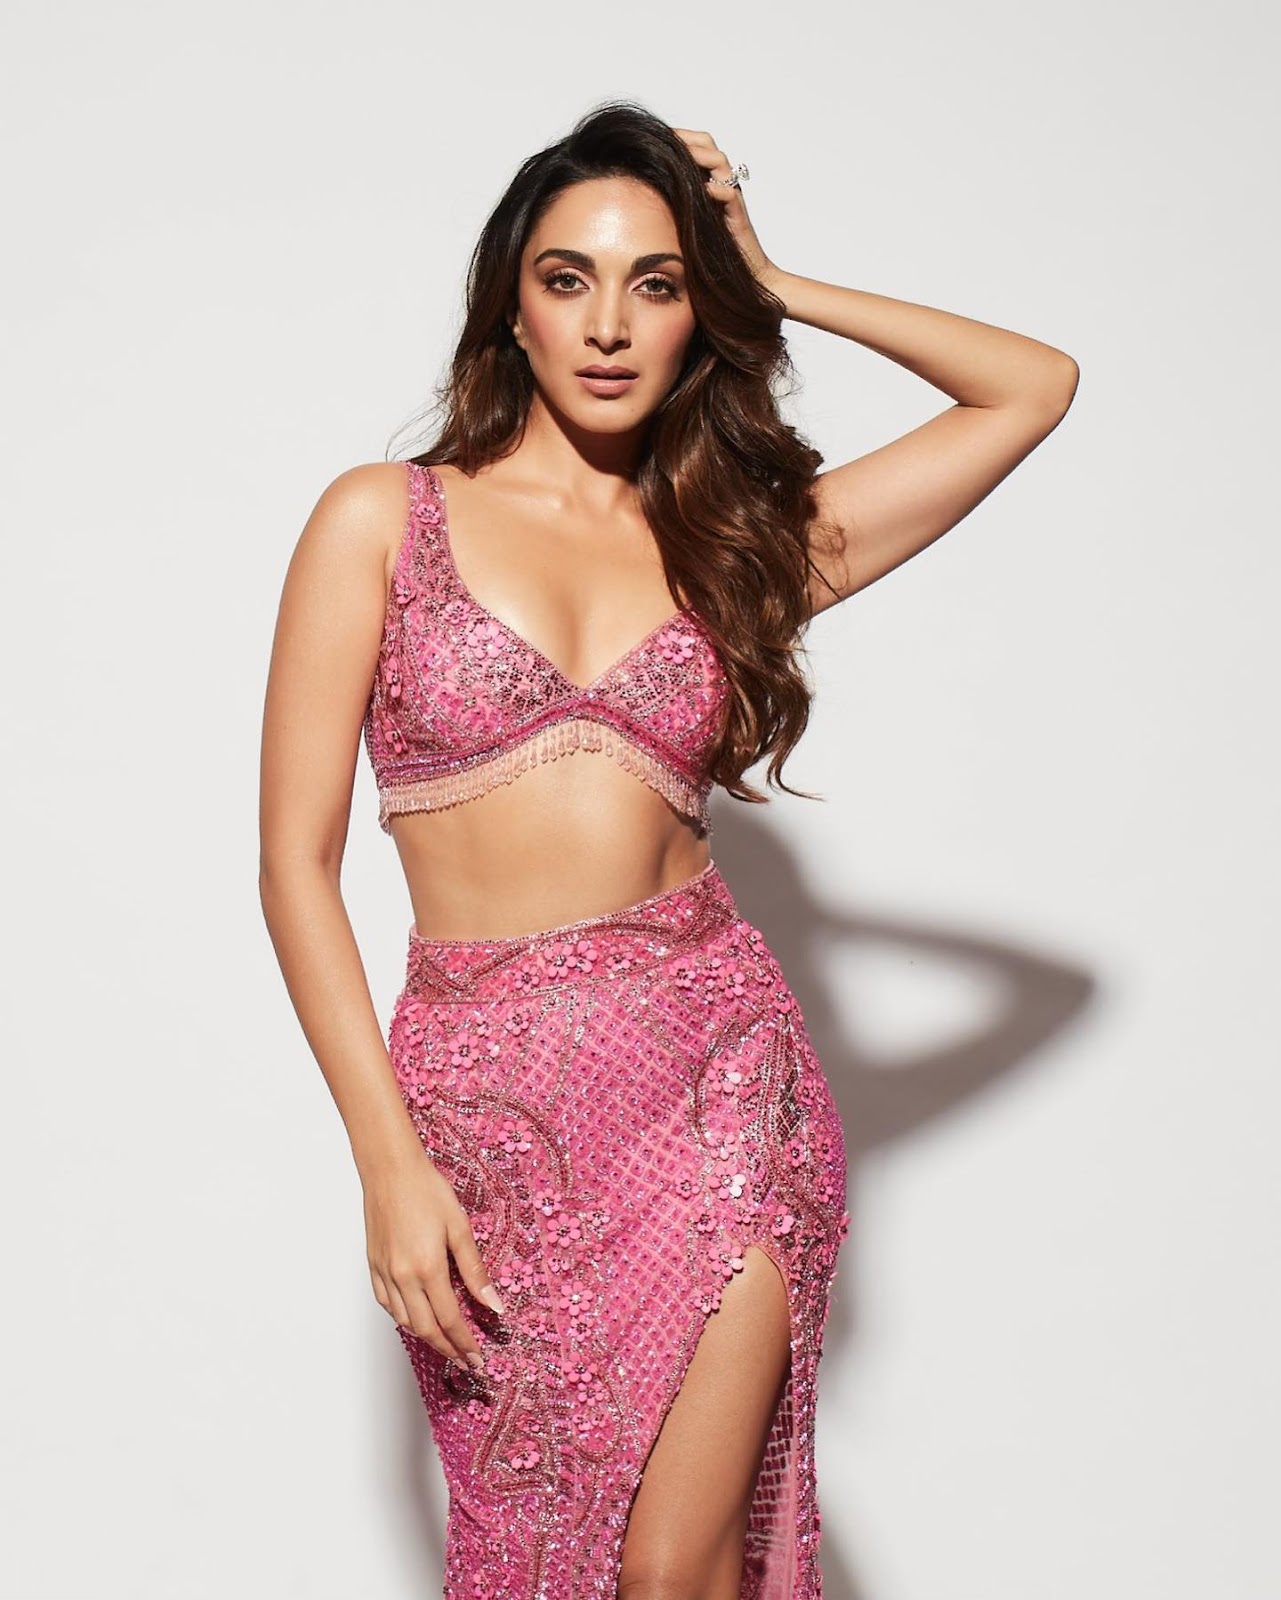 Kiara Advani cleavage sexy body pink high slit outfit